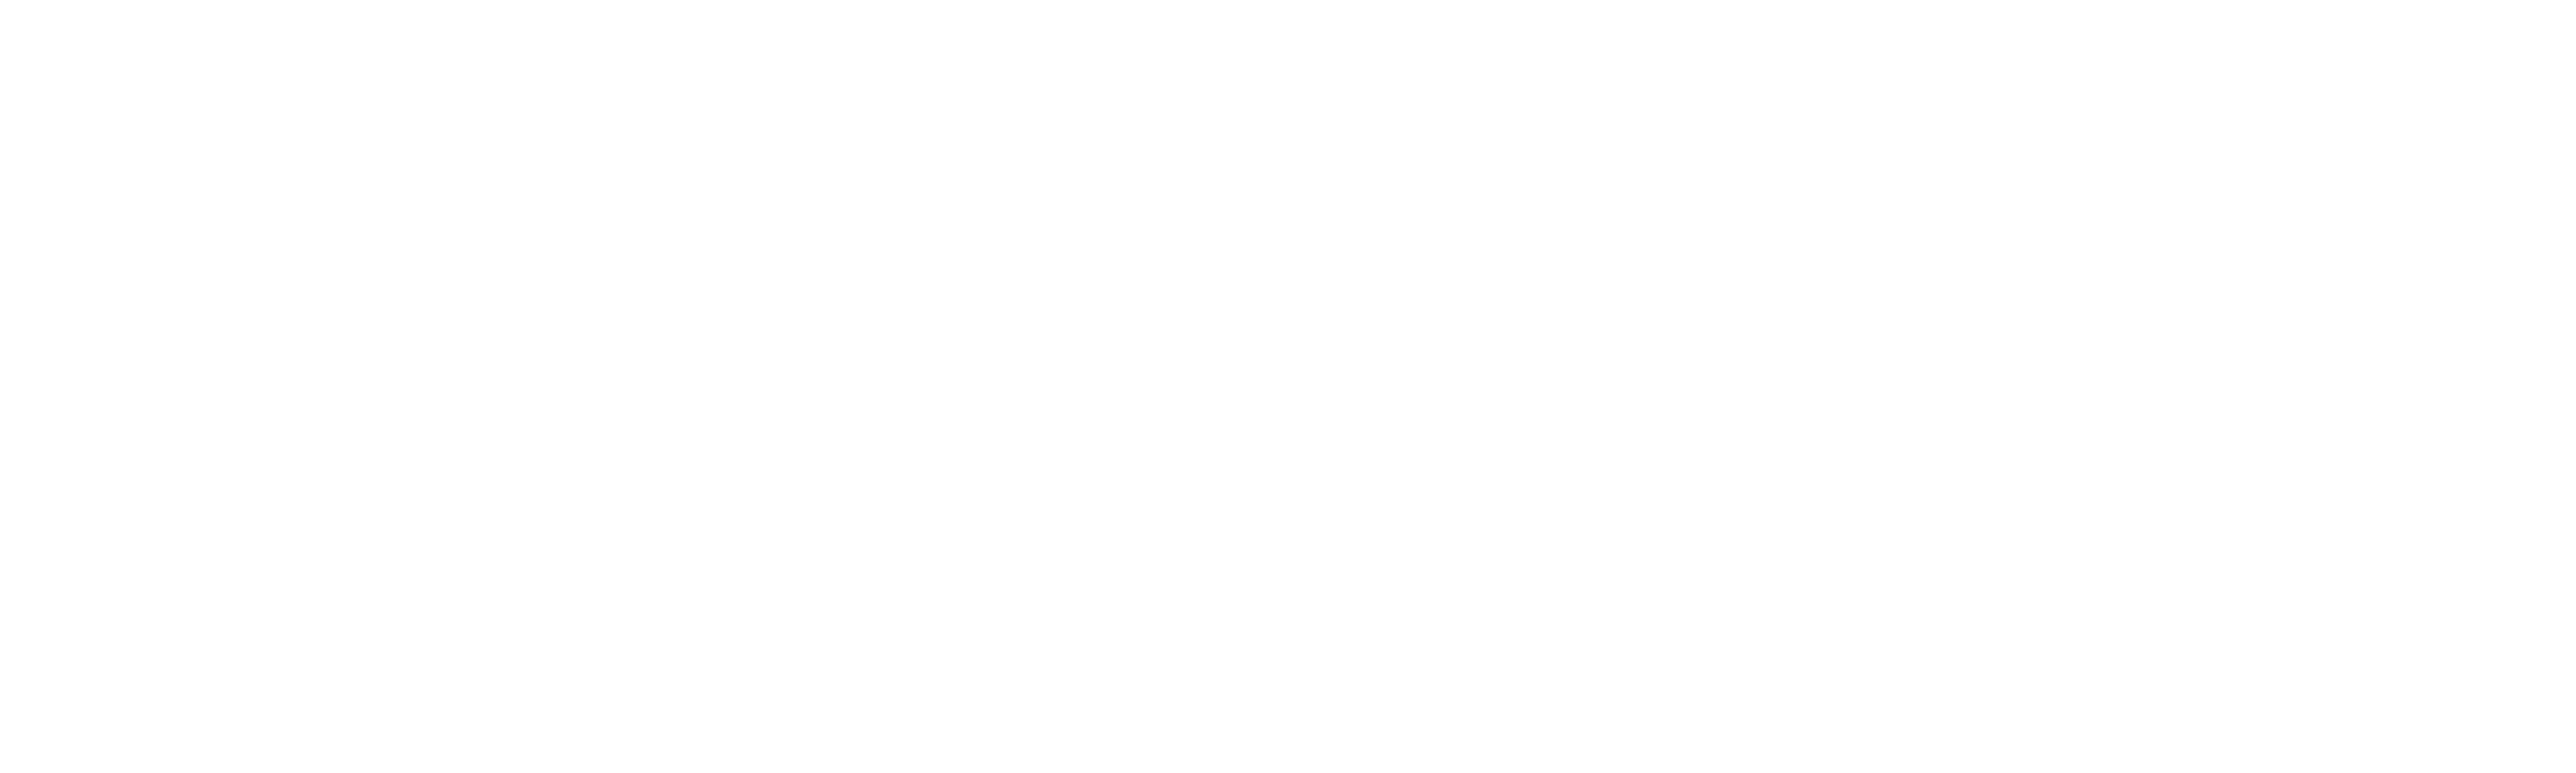 ECH Logo Vector-Landscape All White